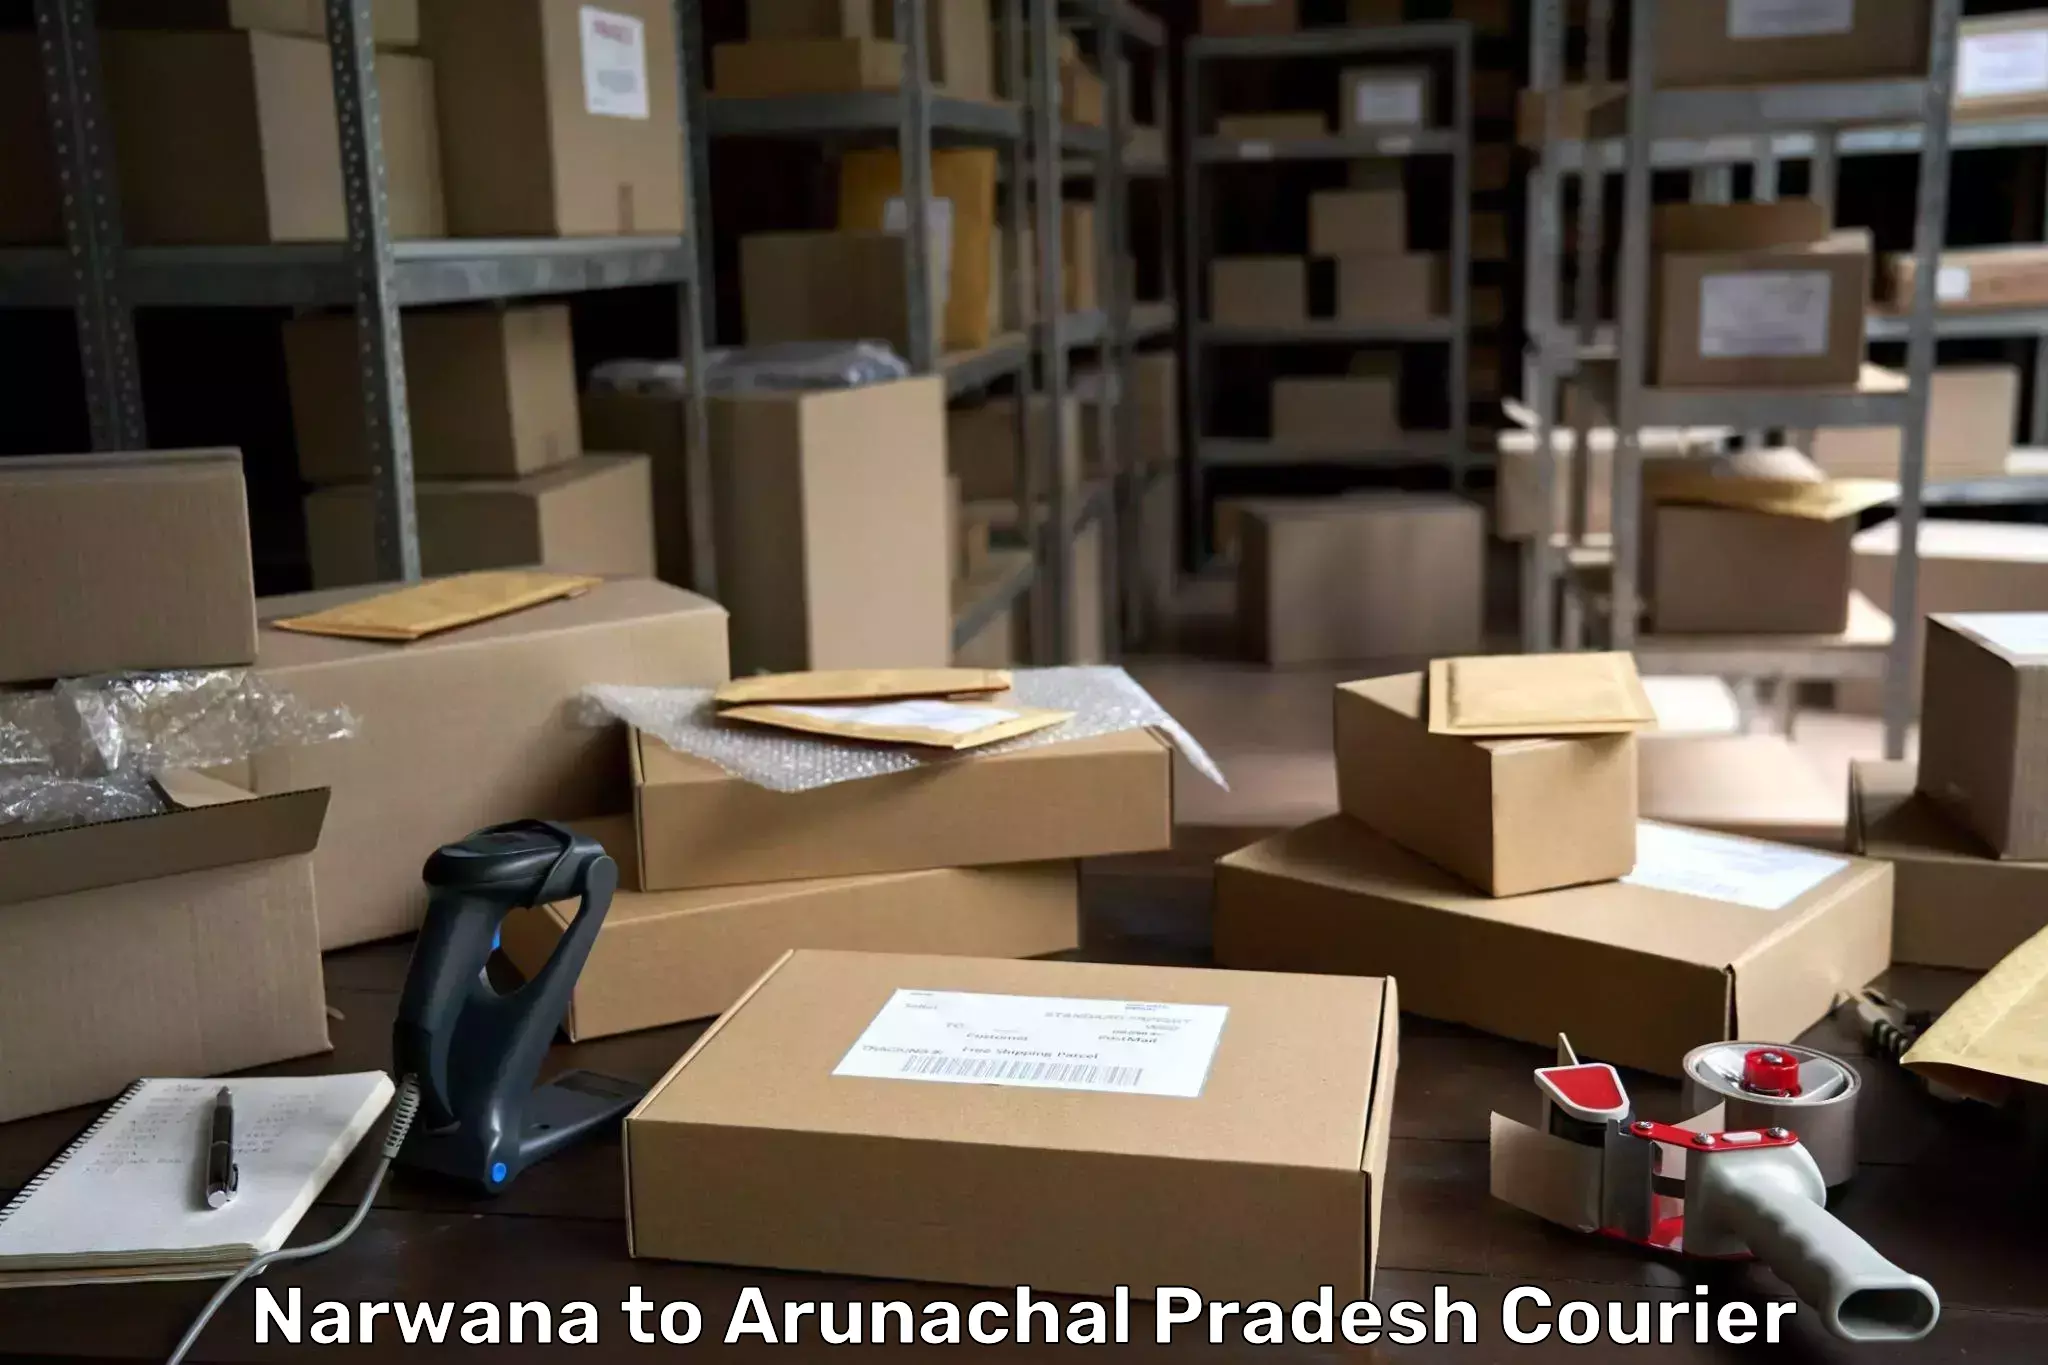 Digital courier platforms Narwana to Arunachal Pradesh